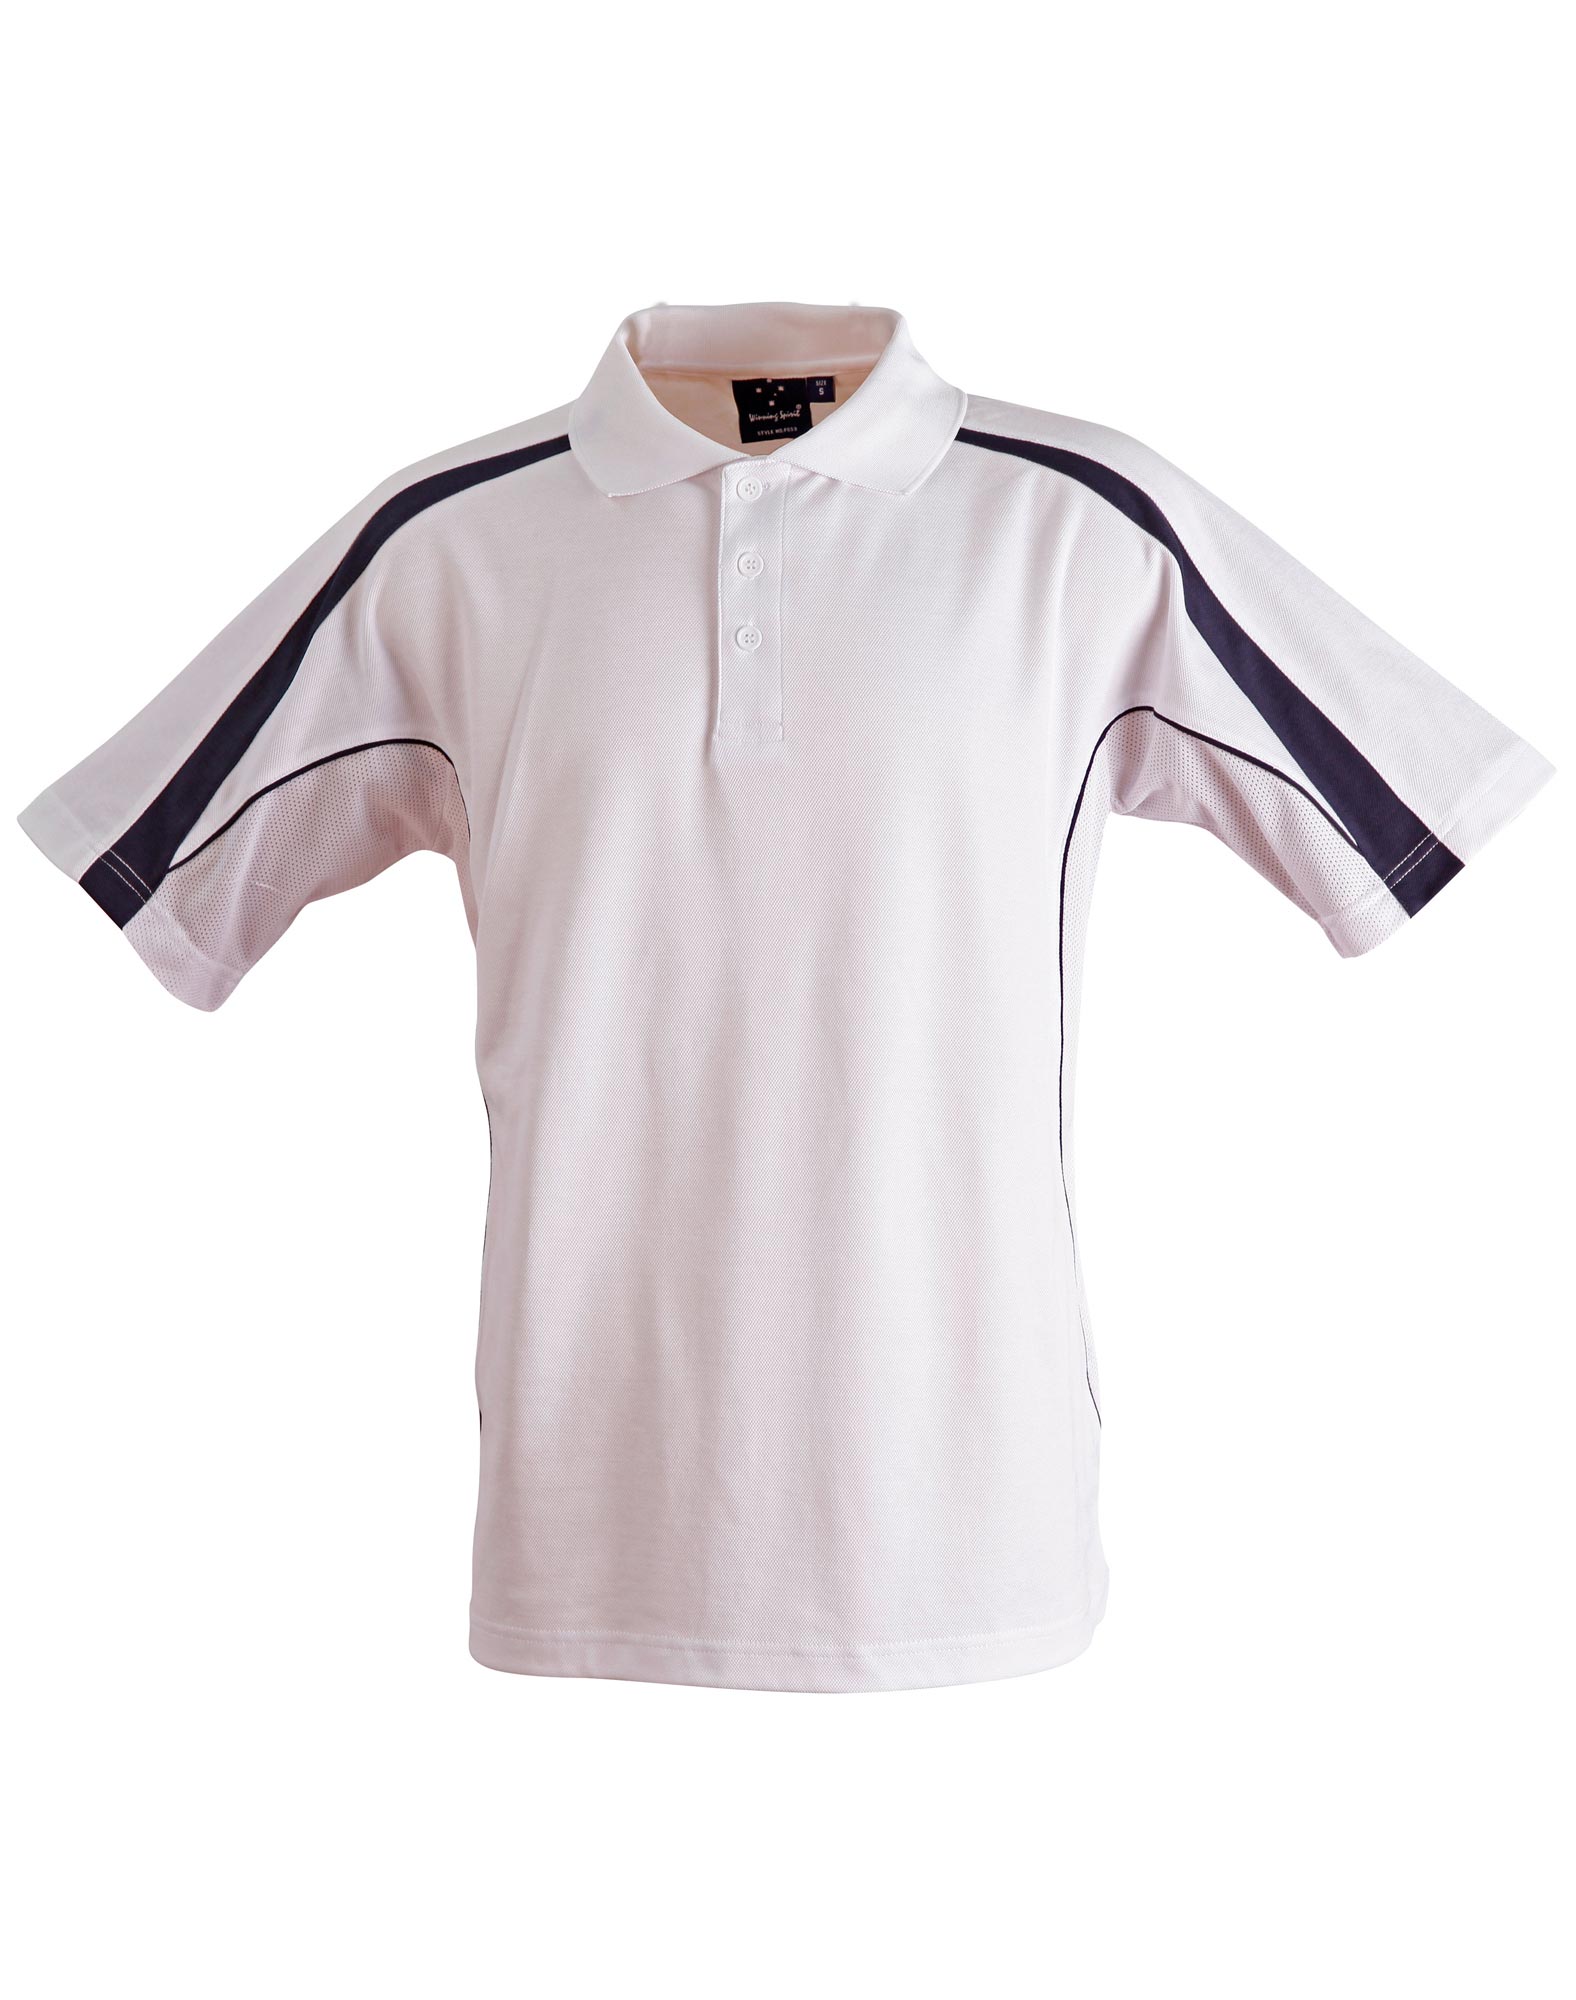 Custom (Black Ash) Legend Polo Shirts for Men Online Perth Australia